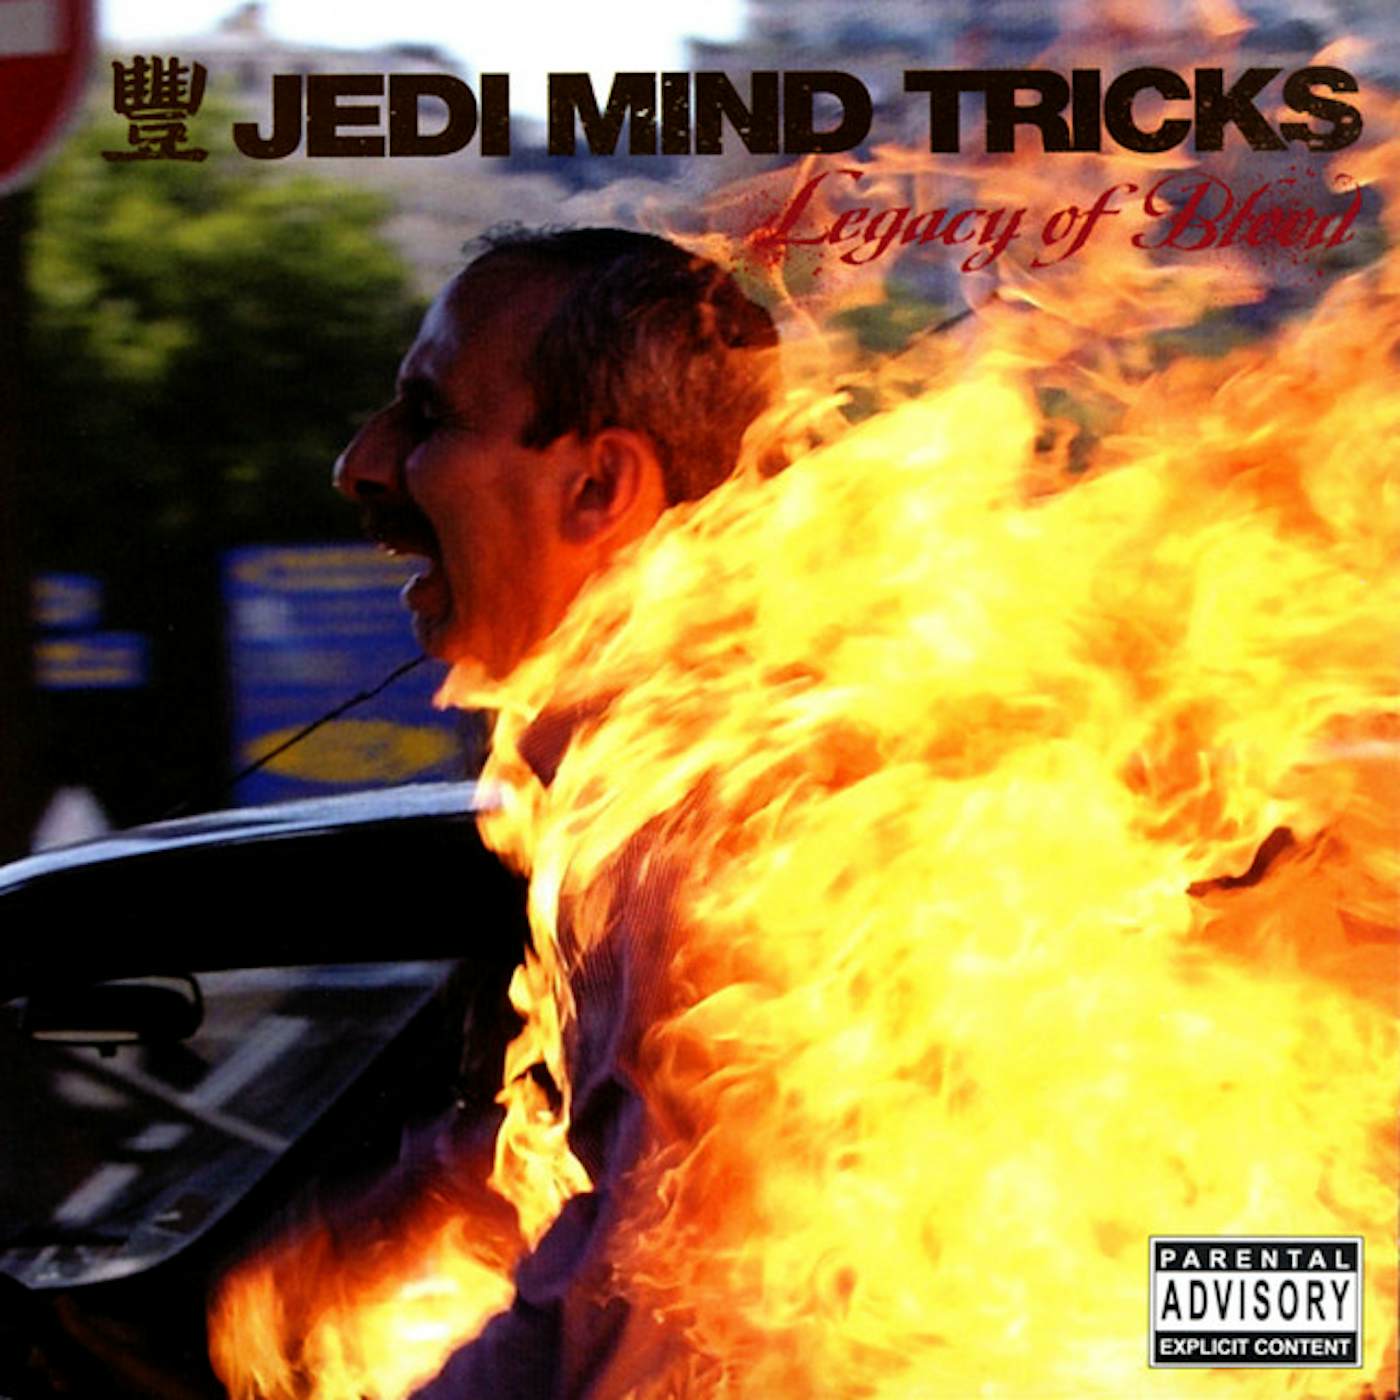 Jedi Mind Tricks Legacy Of Blood Vinyl Record